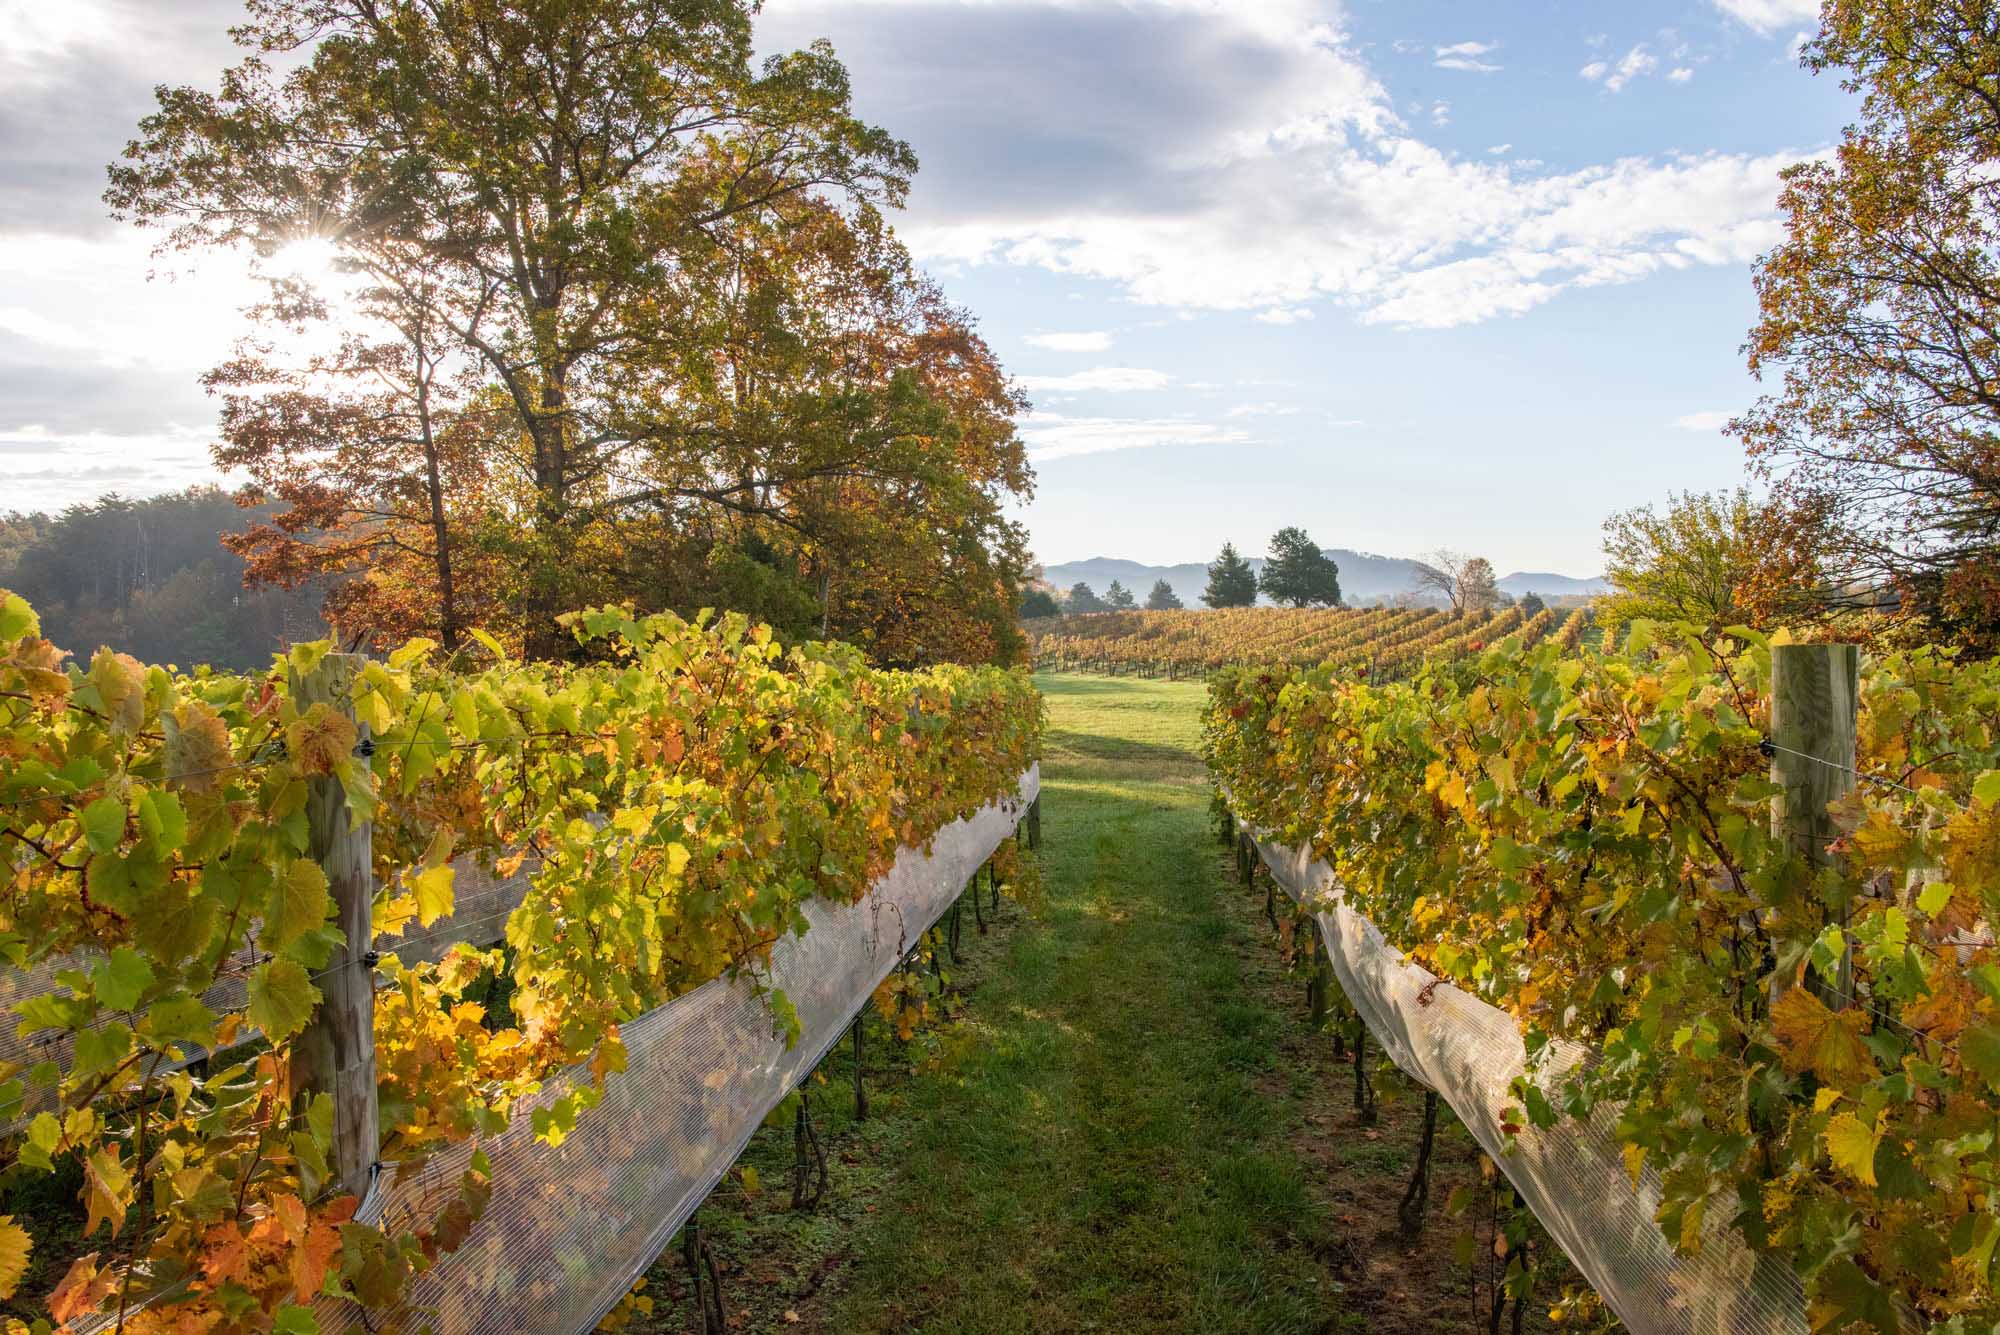 Veritas Vineyards & Winery autumn